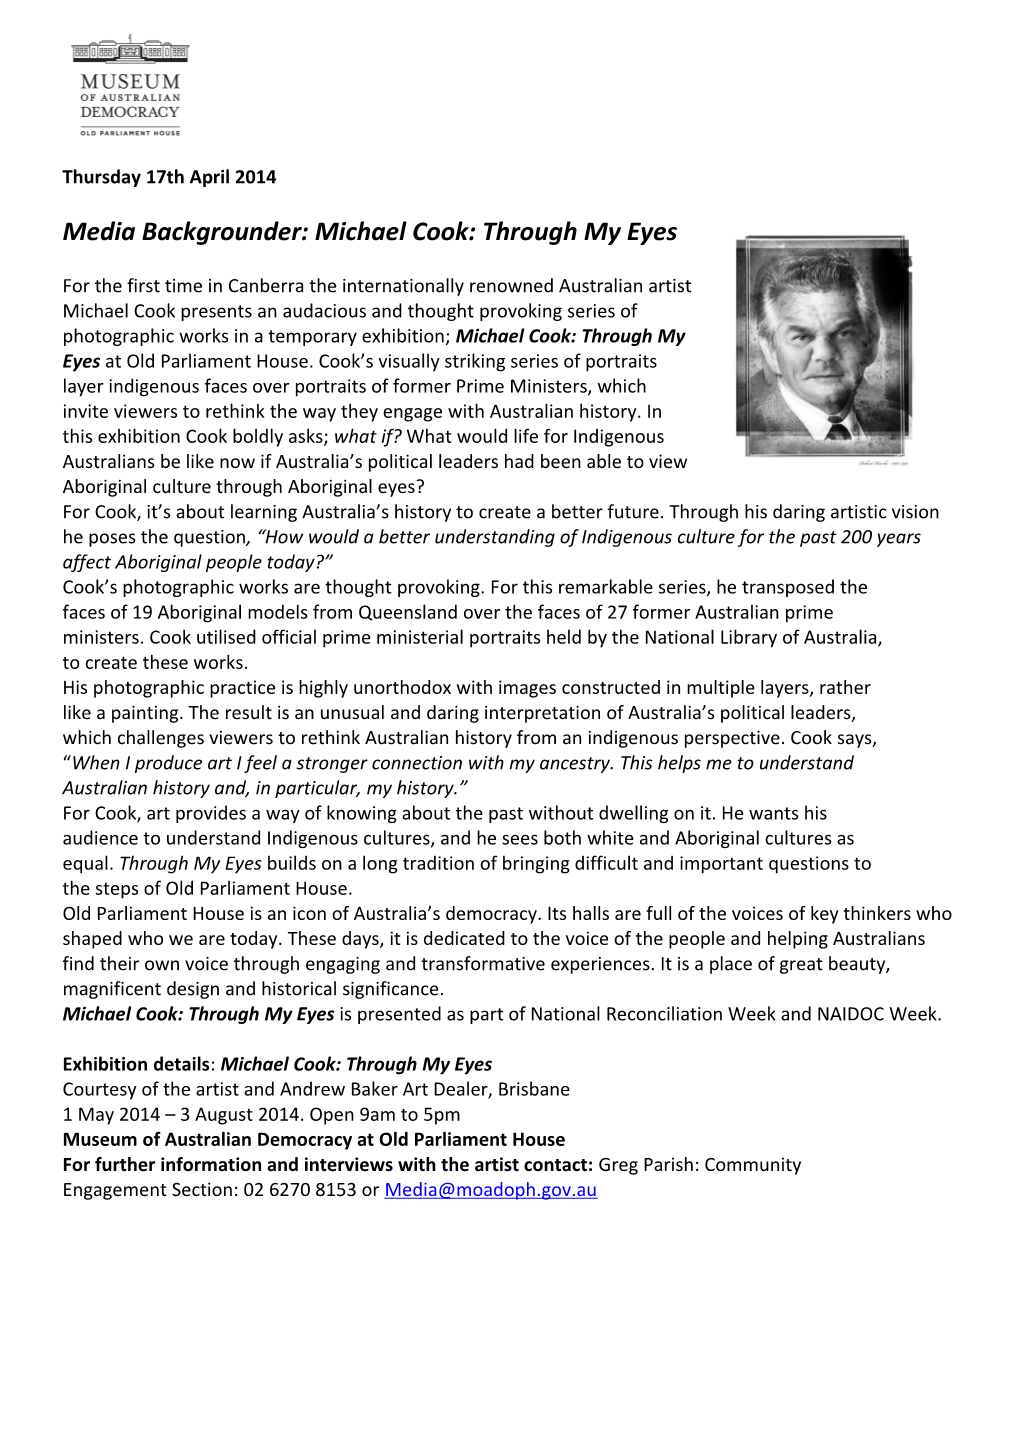 Media Backgrounder: Michael Cook: Through My Eyes